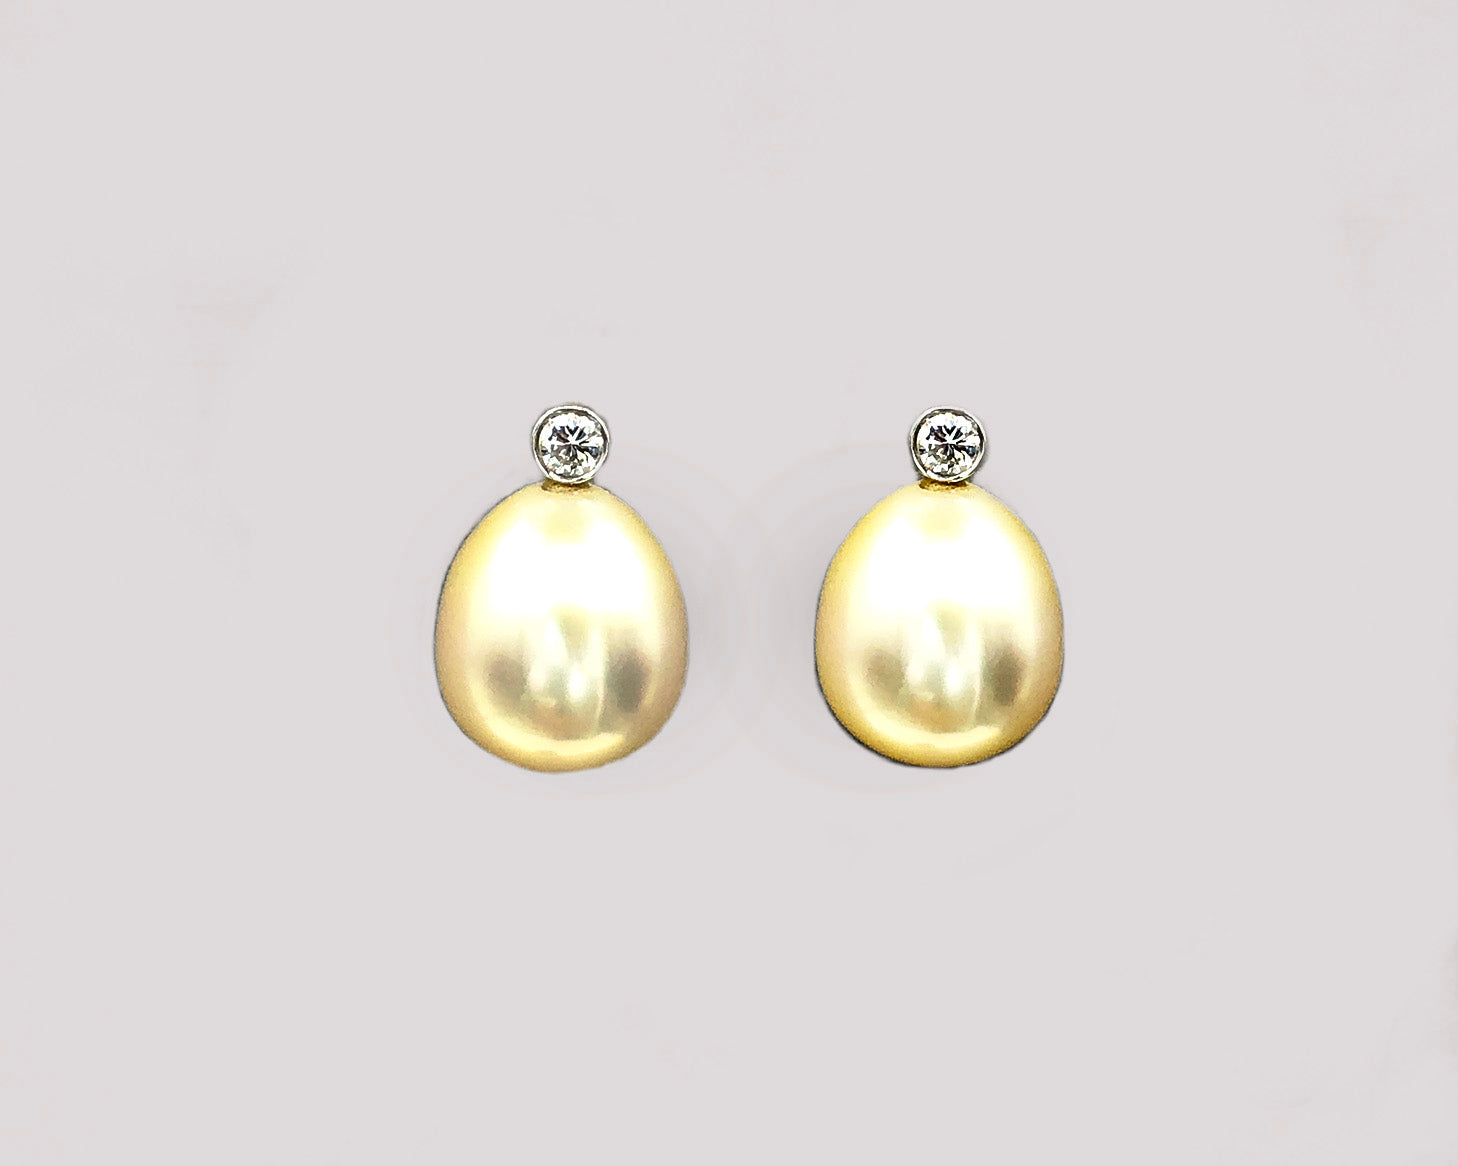 South Sea Pearl Diamond Stud Earrings